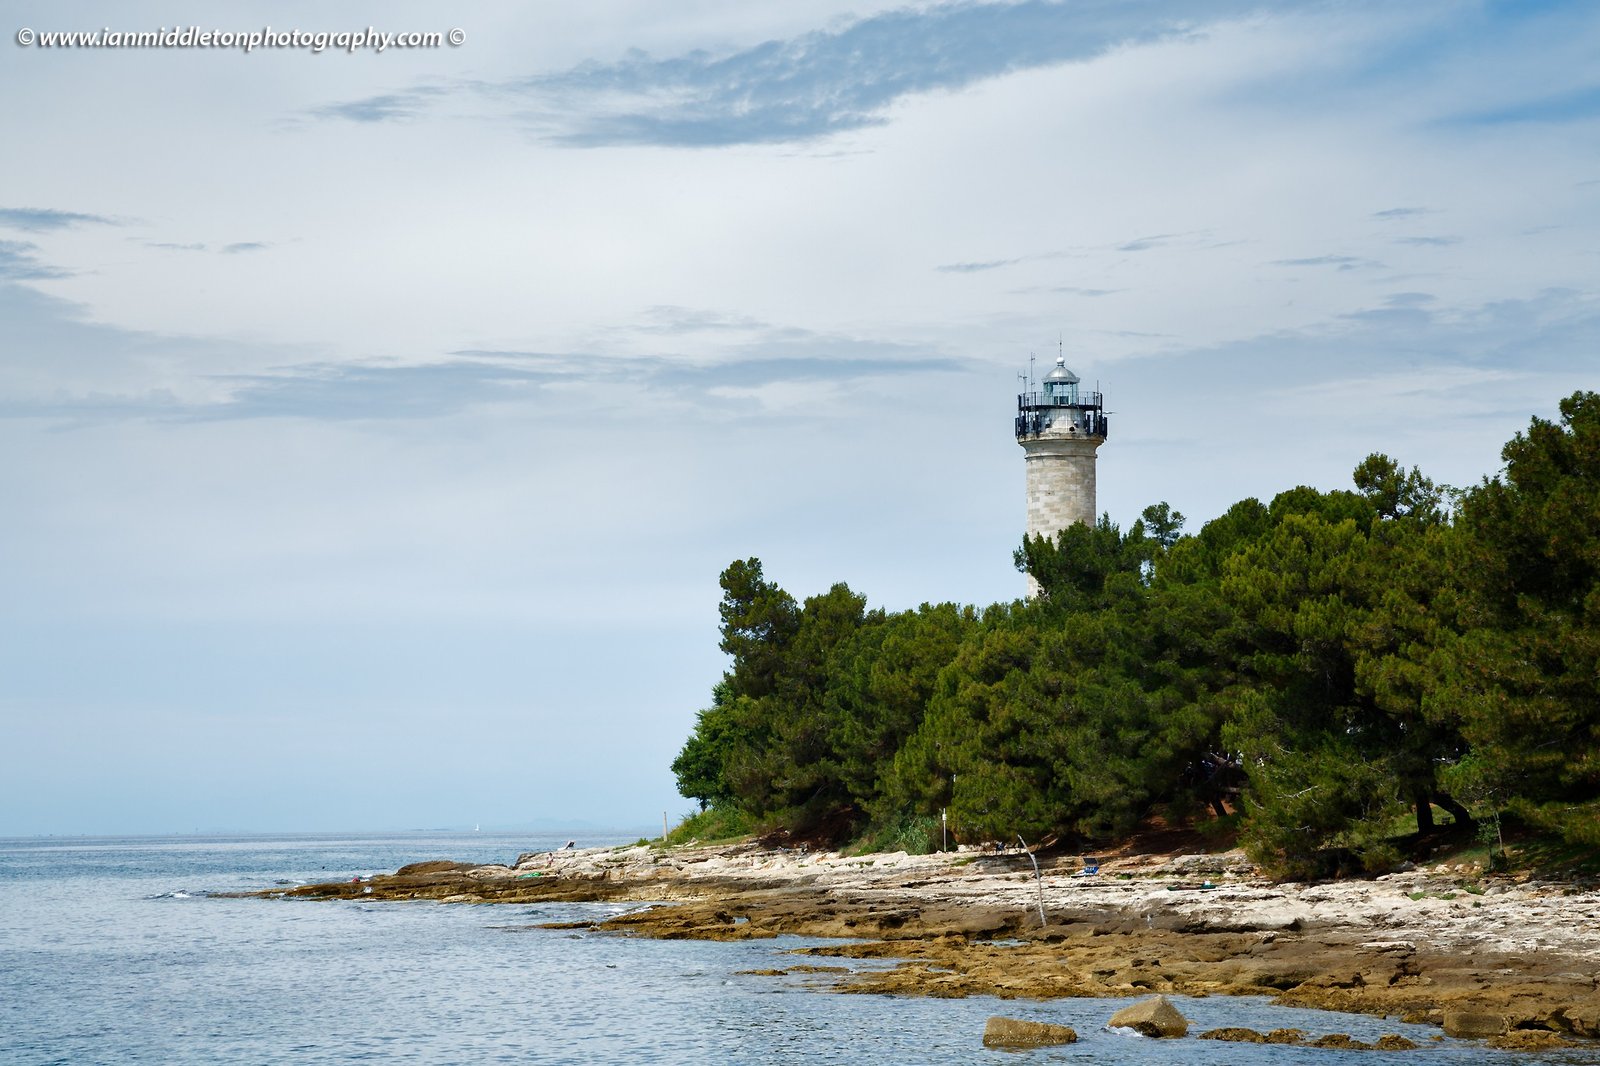 Savudrija Lighthouse seen from Basanija, Istria Coast, Croatia.